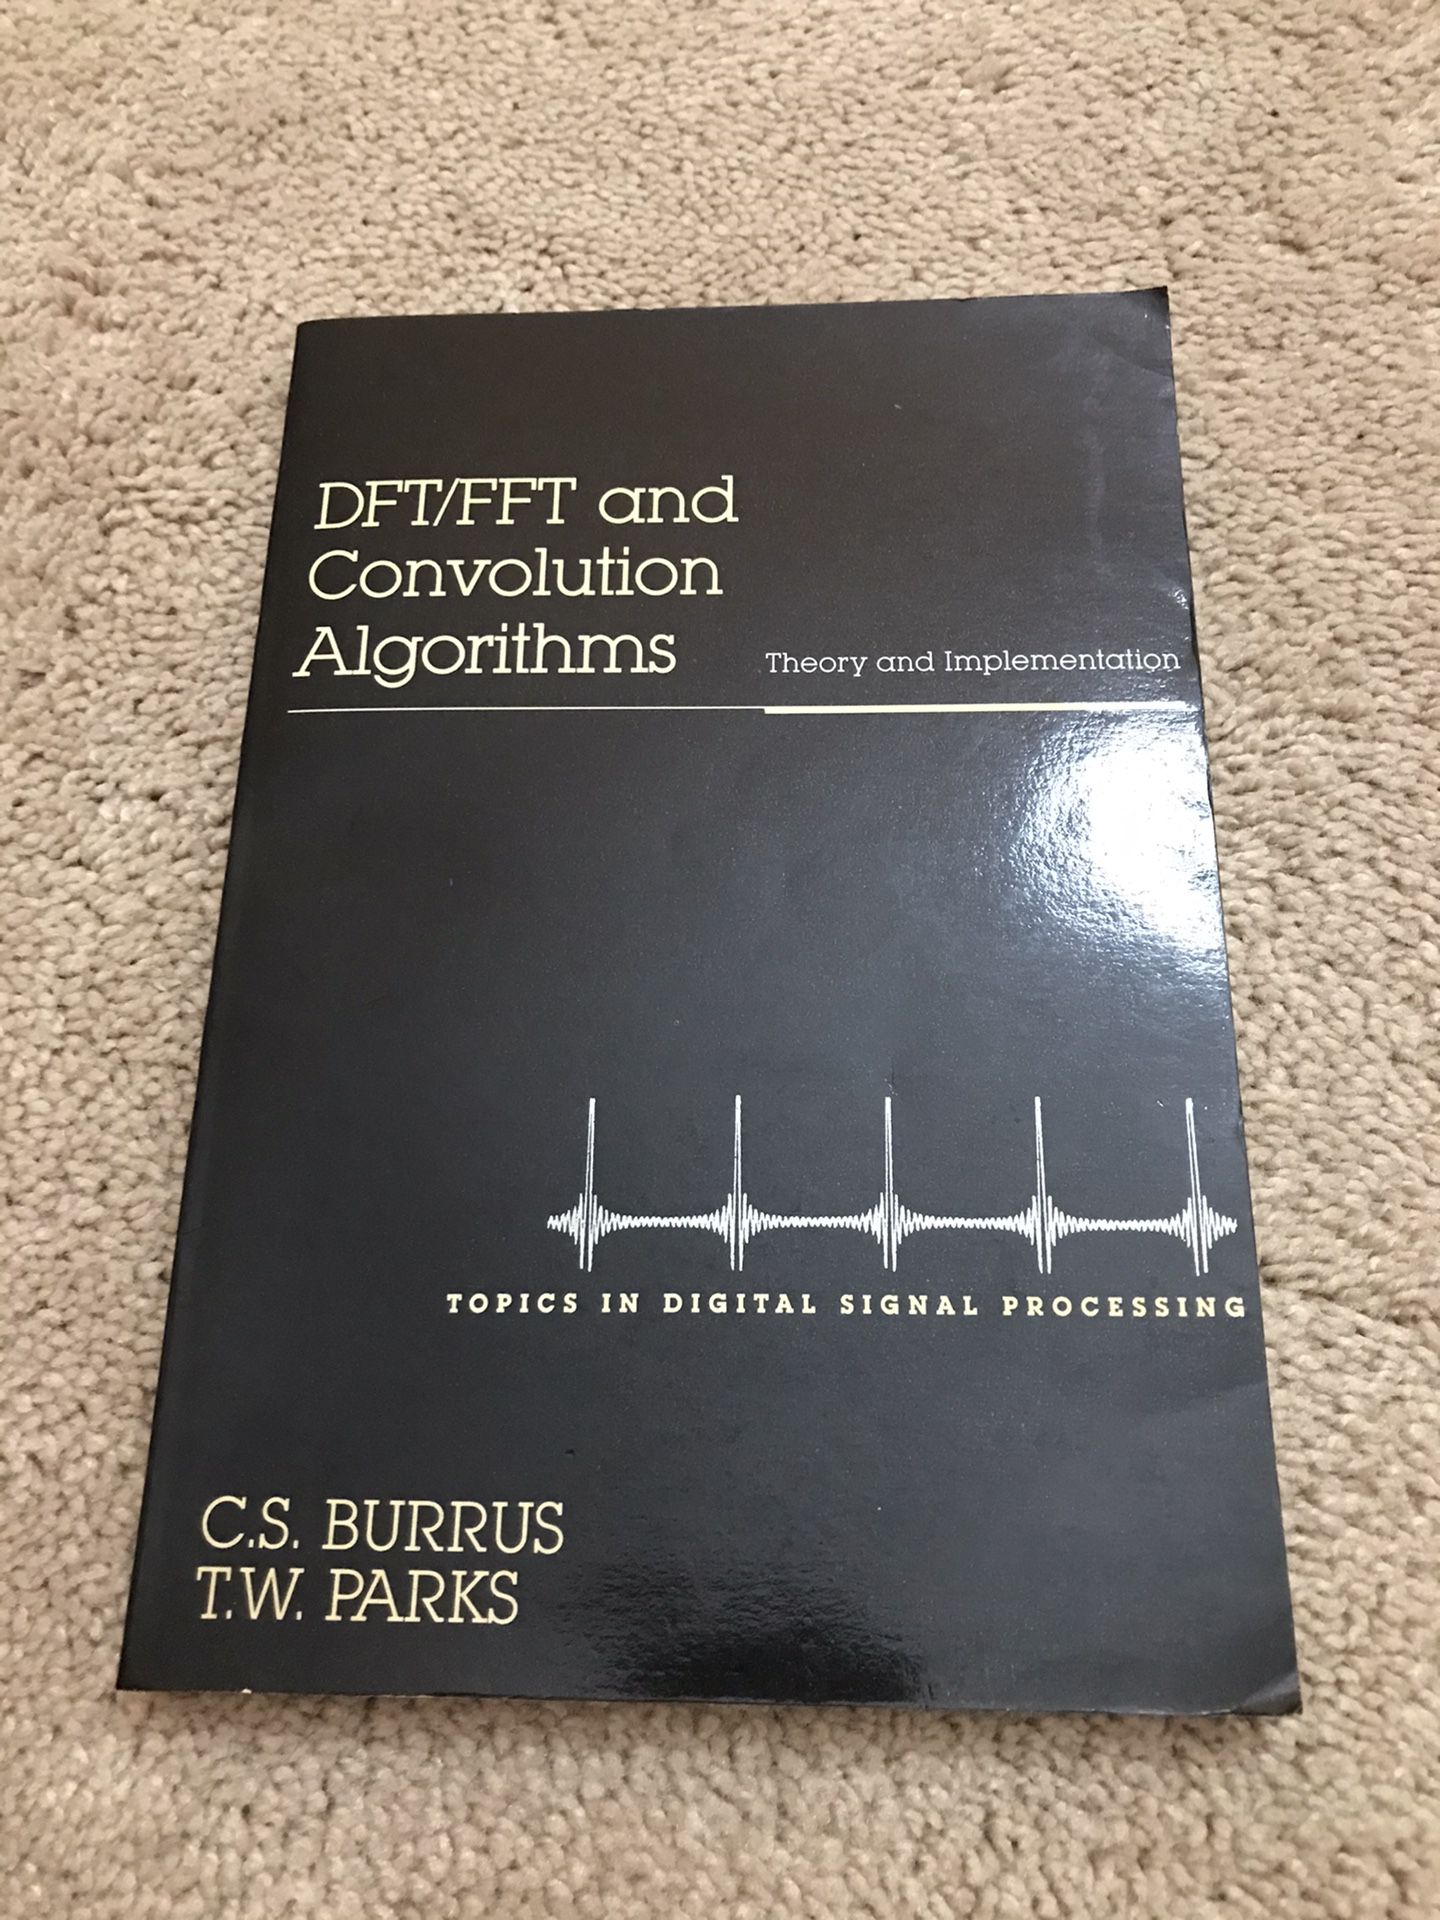 DFT/FFT and Convolution Algorithms